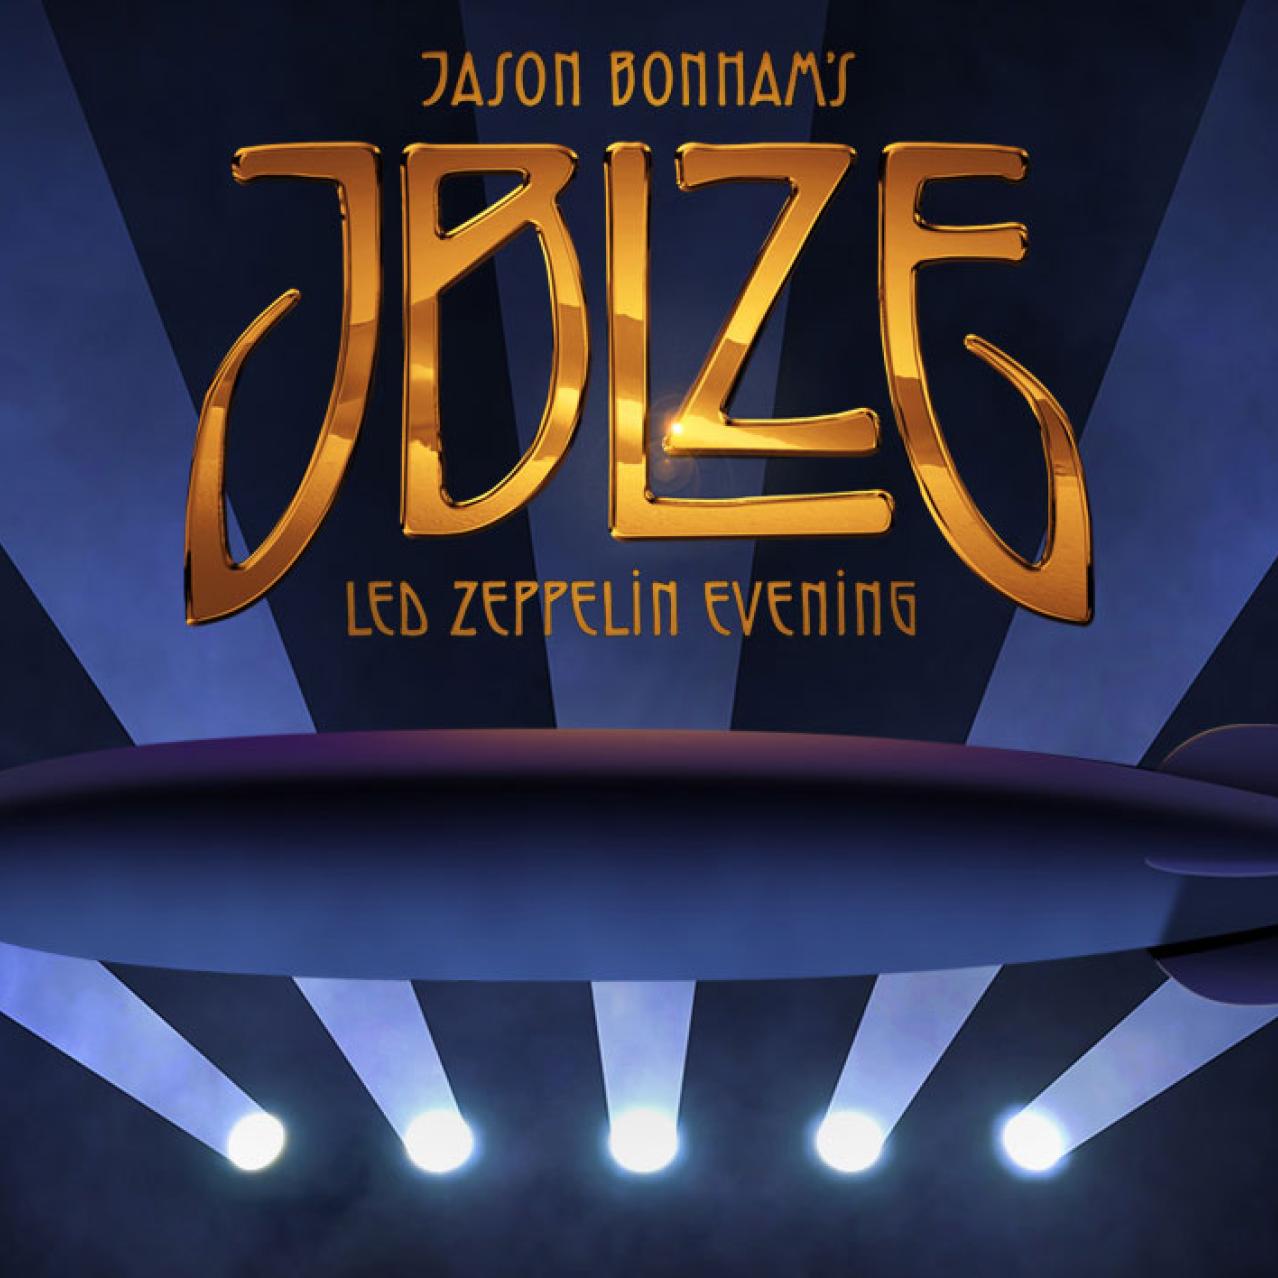 Jason Bonham's Led Zeppelin Evening